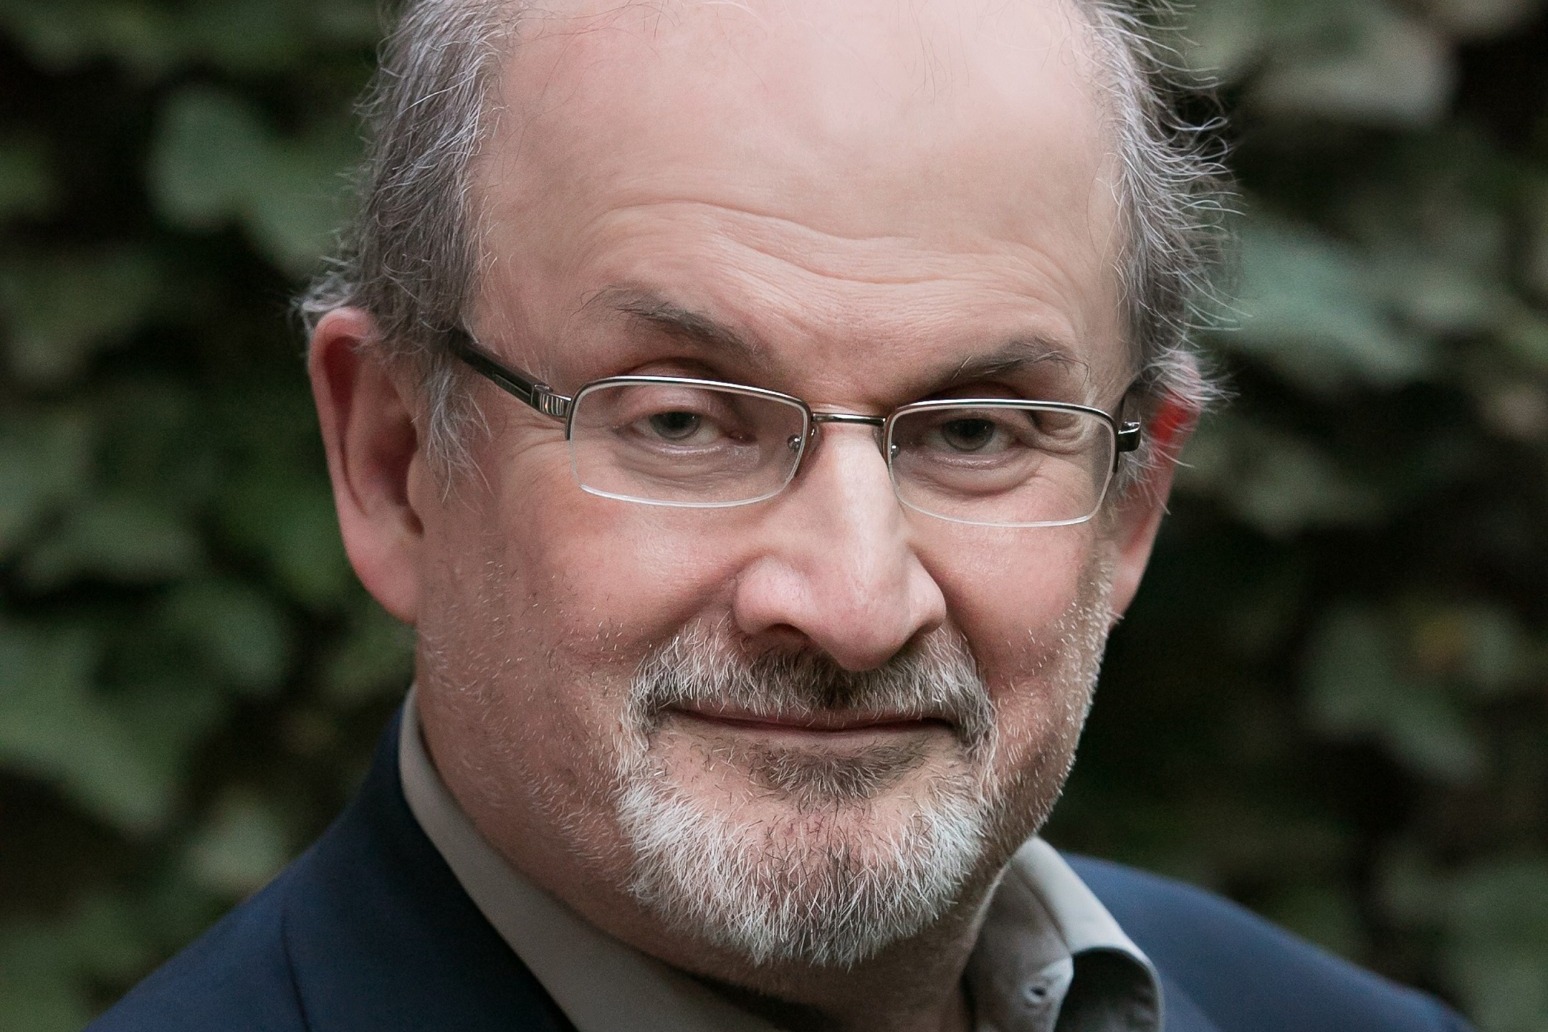 Sir Salman Rushdie off ventilator and talking following stabbing in US 